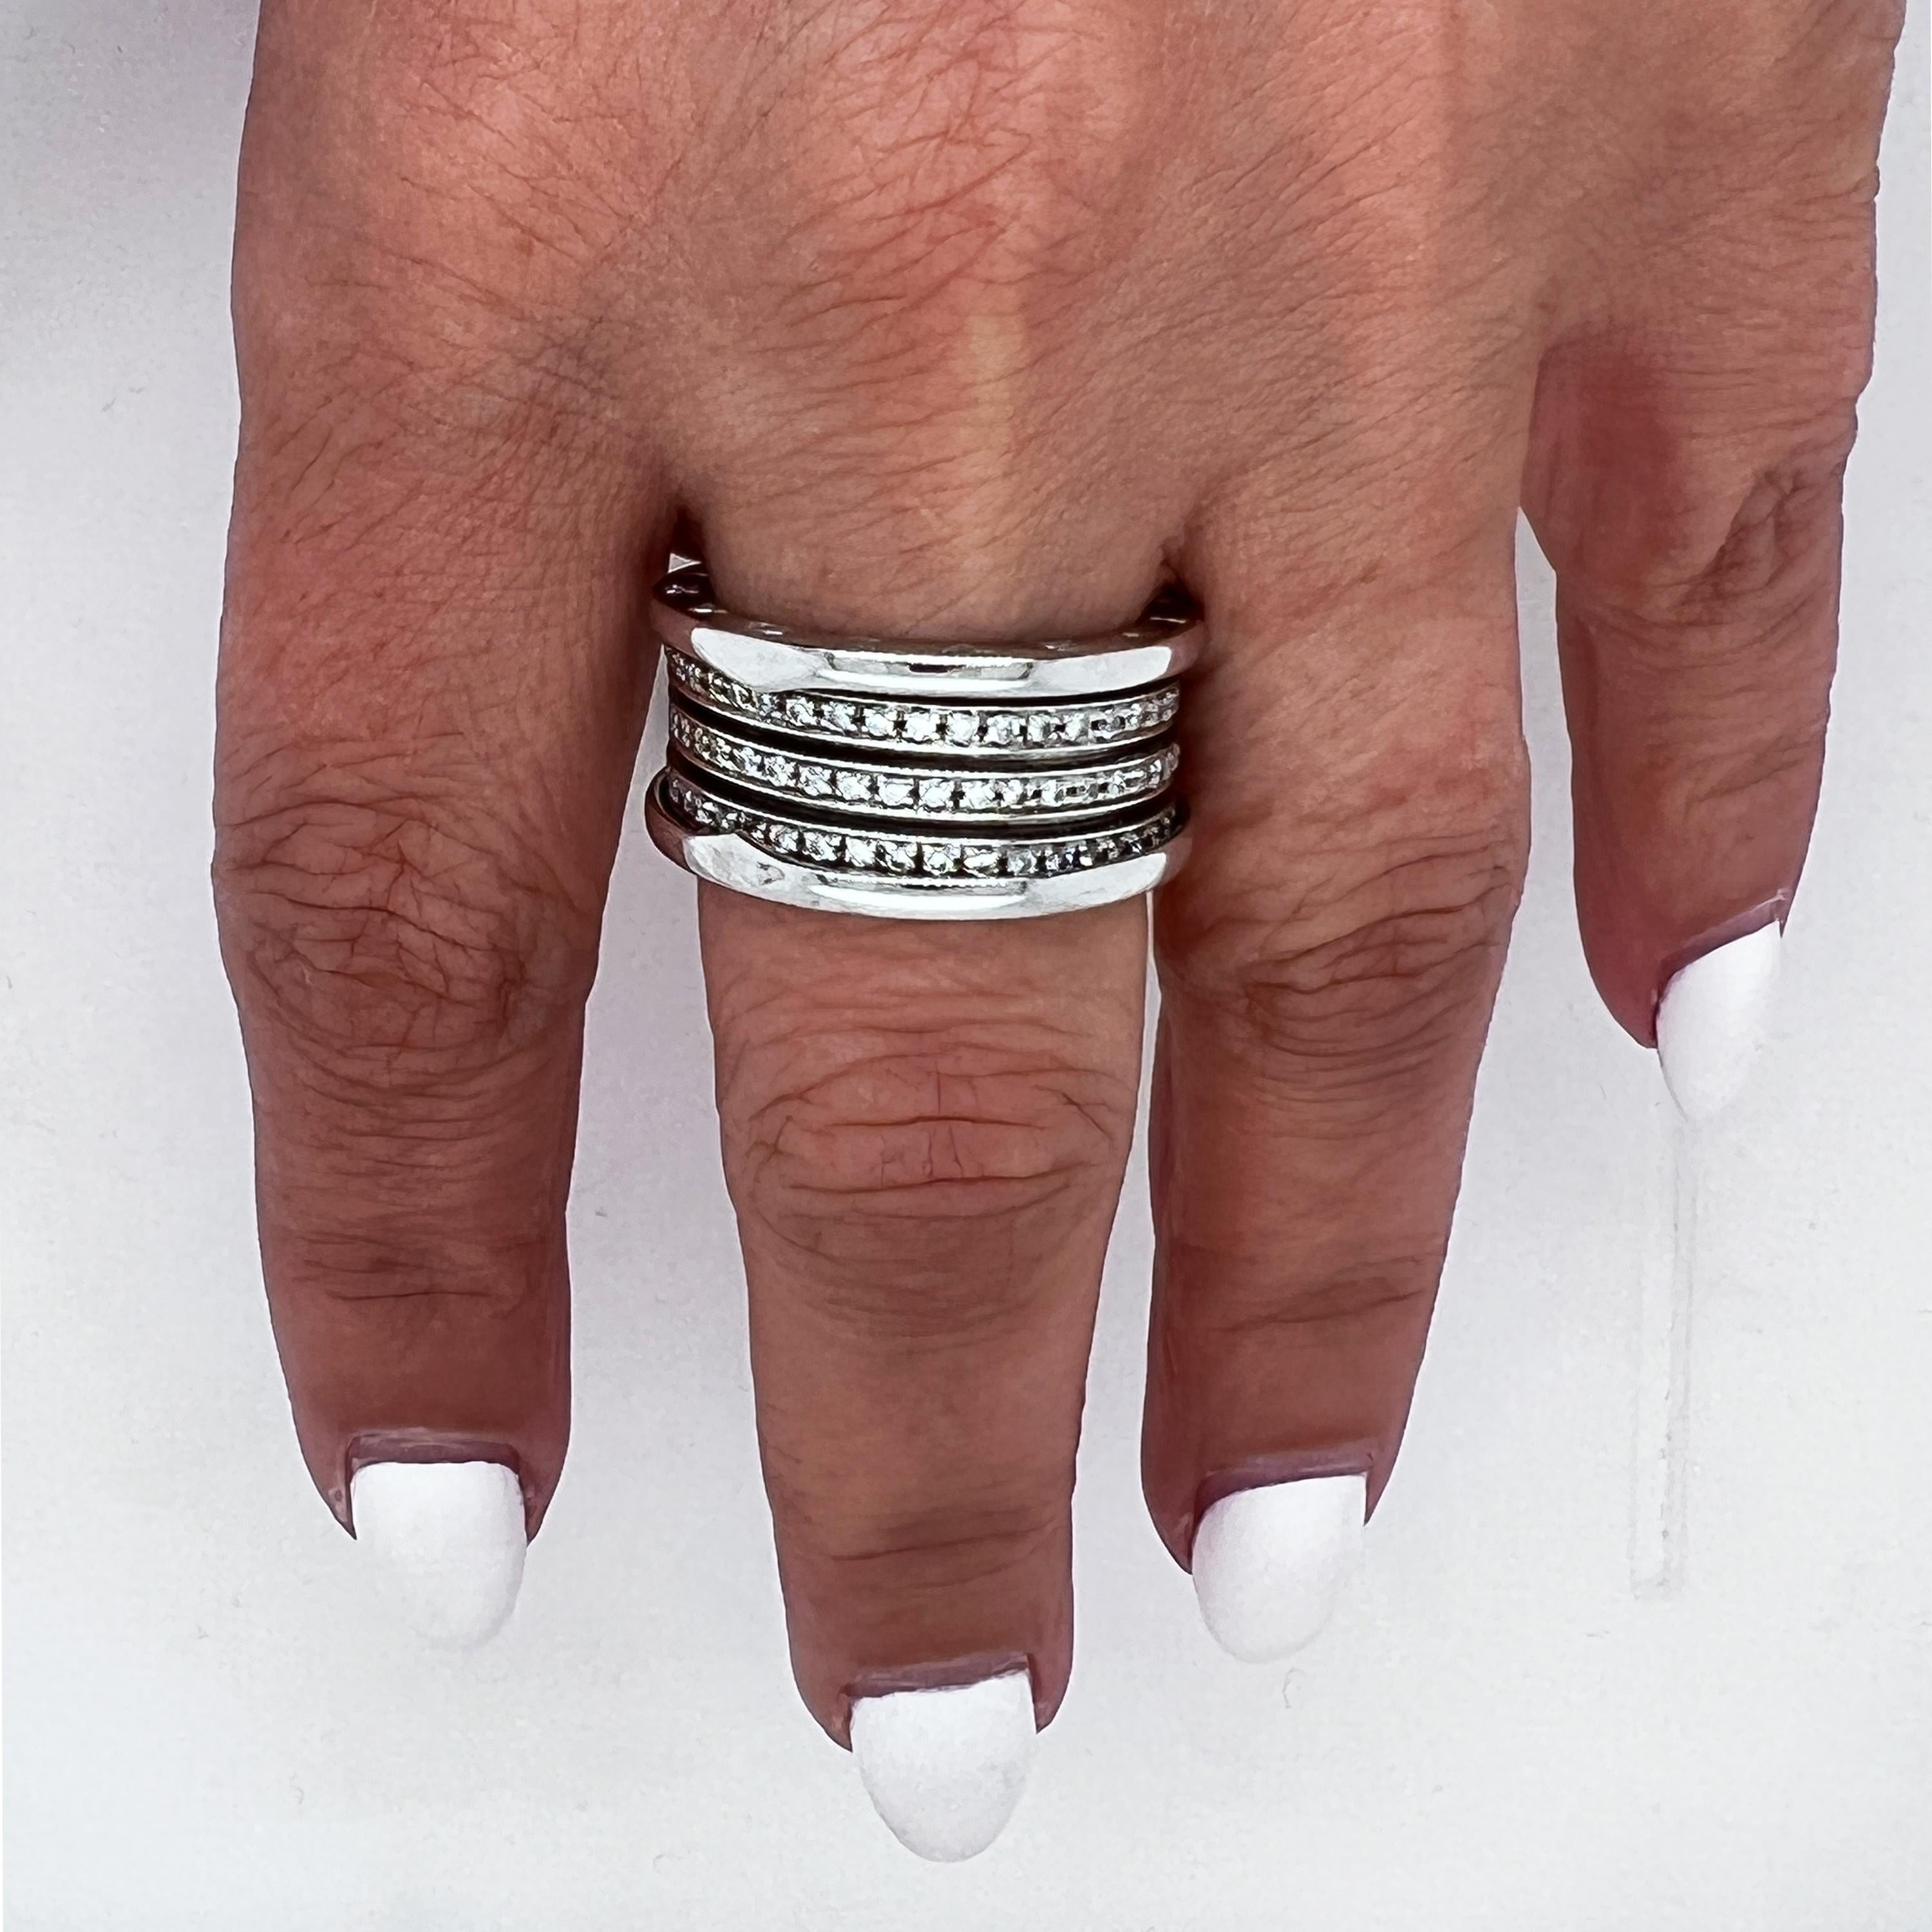 Bvlgari B.Zero1 18K White Gold Diamond Size 9 Band Ring

Diamonds are set in three rows, F-G color, VS clarity. 

10mm band width. Size 9. 

Comes with original Bvlgari box.
Retail: $10,000
Signed Bvlgari